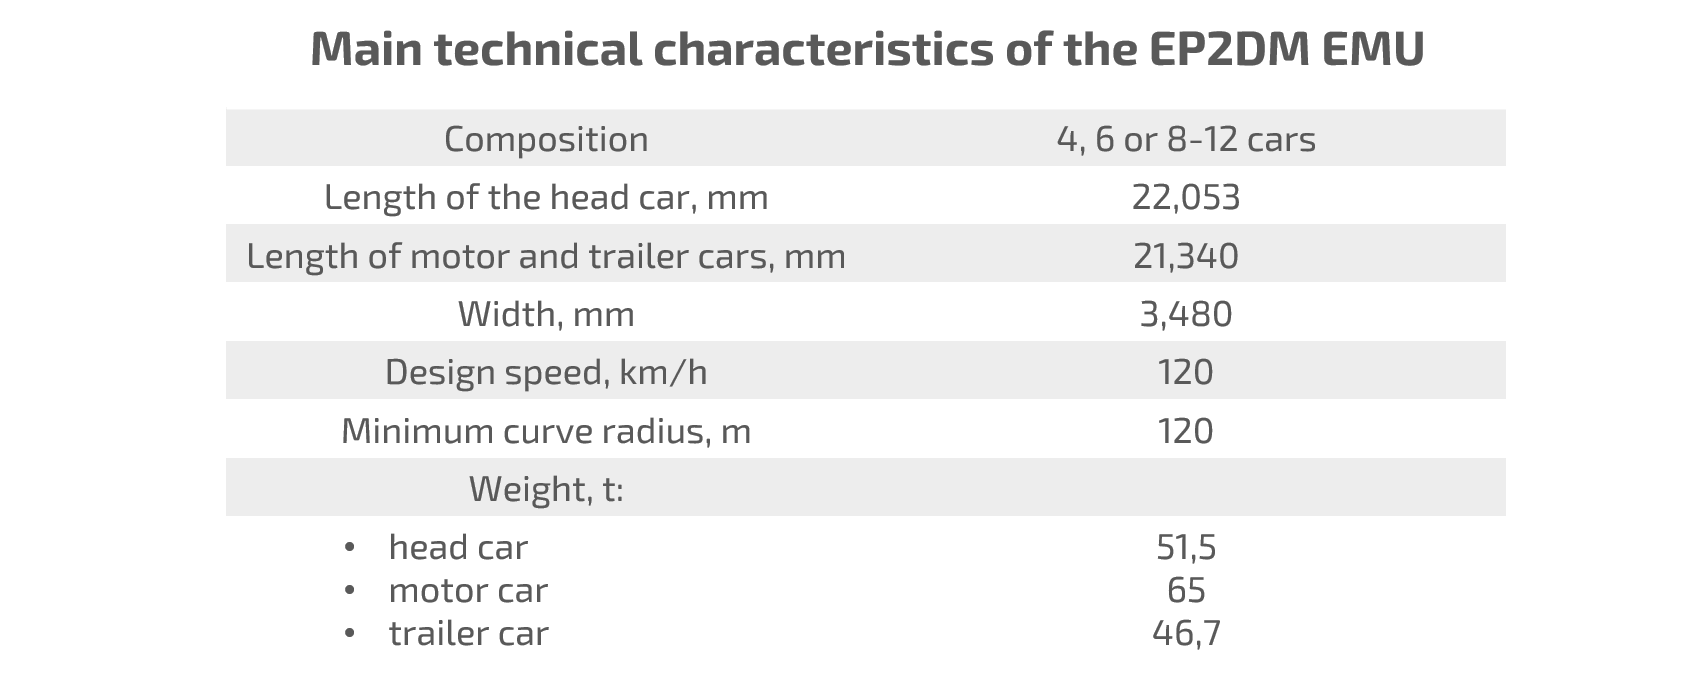 Main technical characteristics of the EP2DM EMU